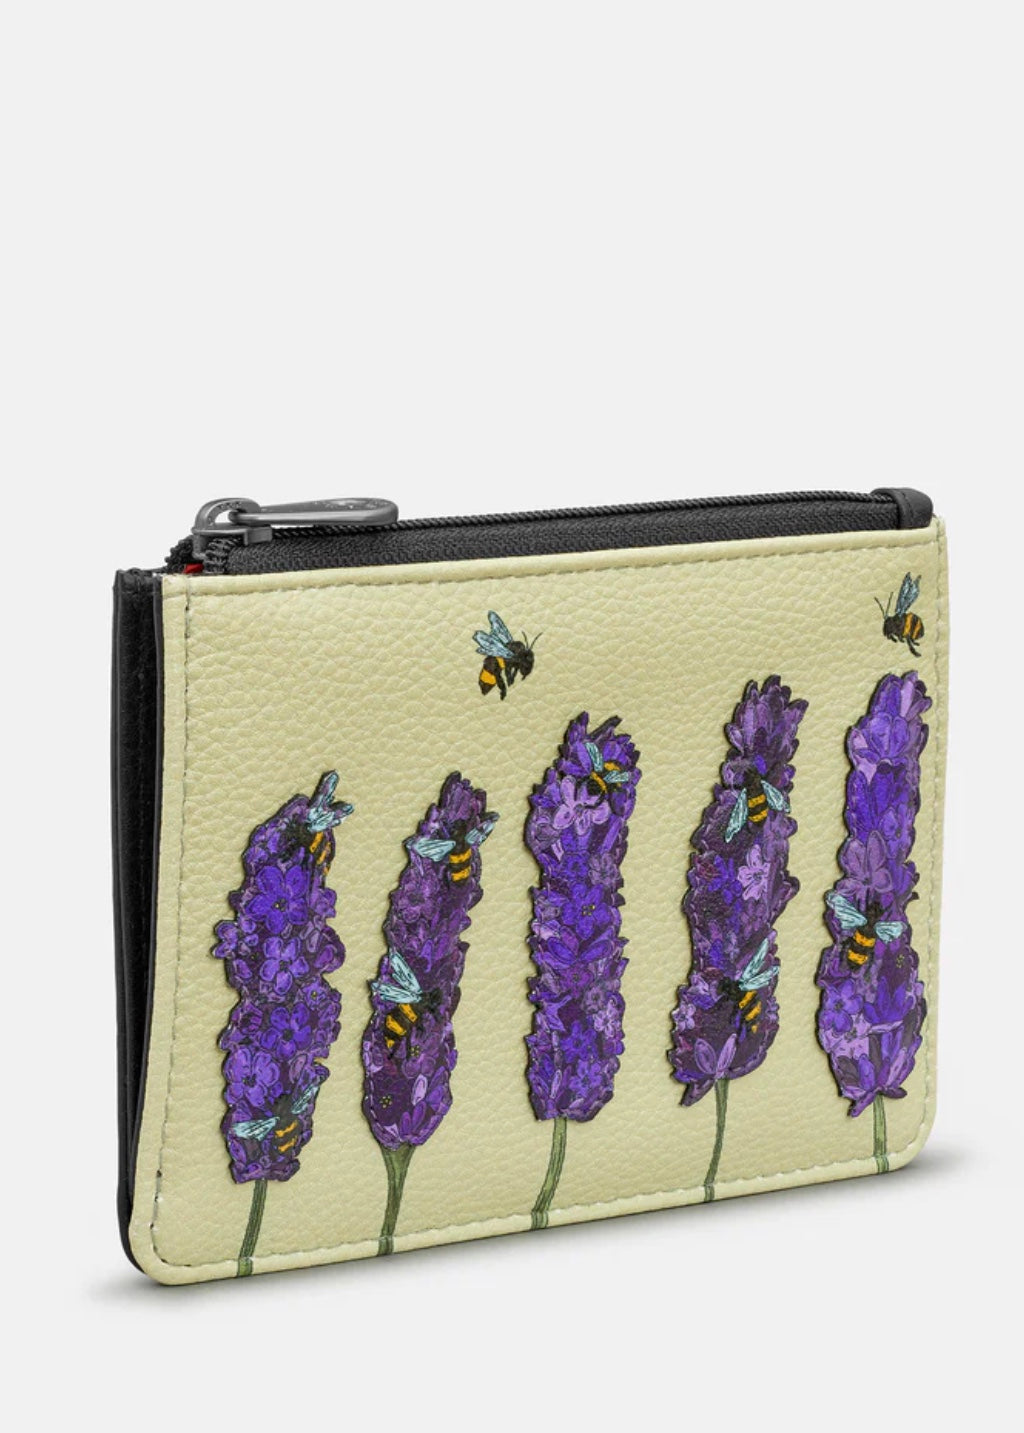 Yoshi Leather - Bees Love Lavender Zip Purse / Black